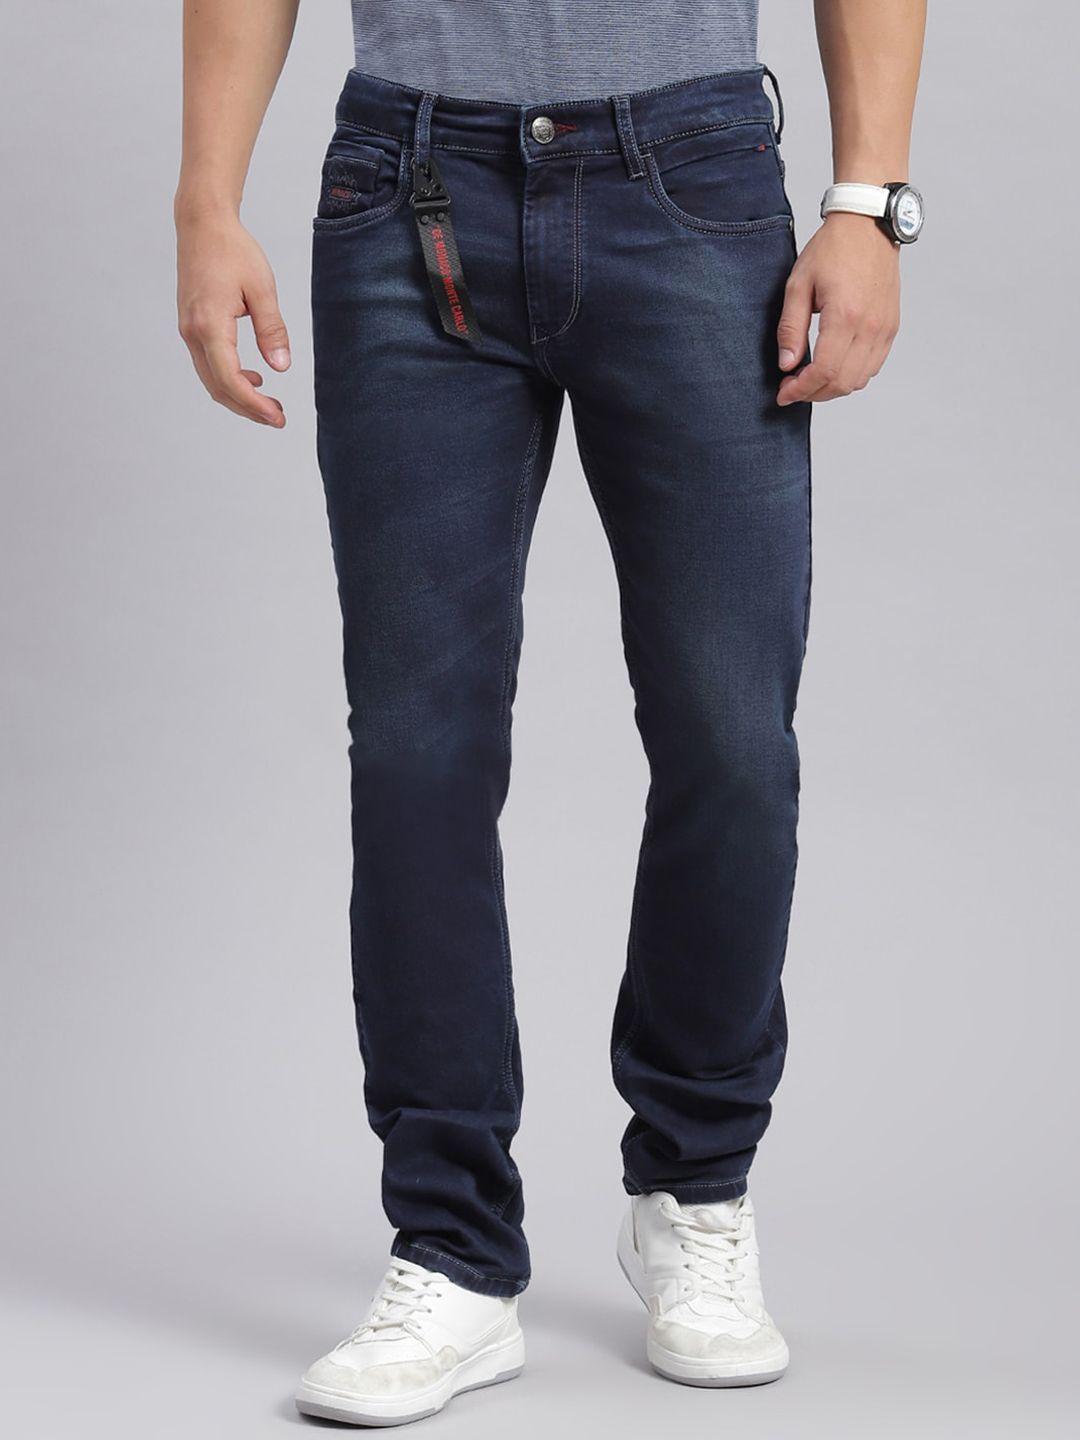 monte carlo men regular fit mid-rise clean look cotton jeans